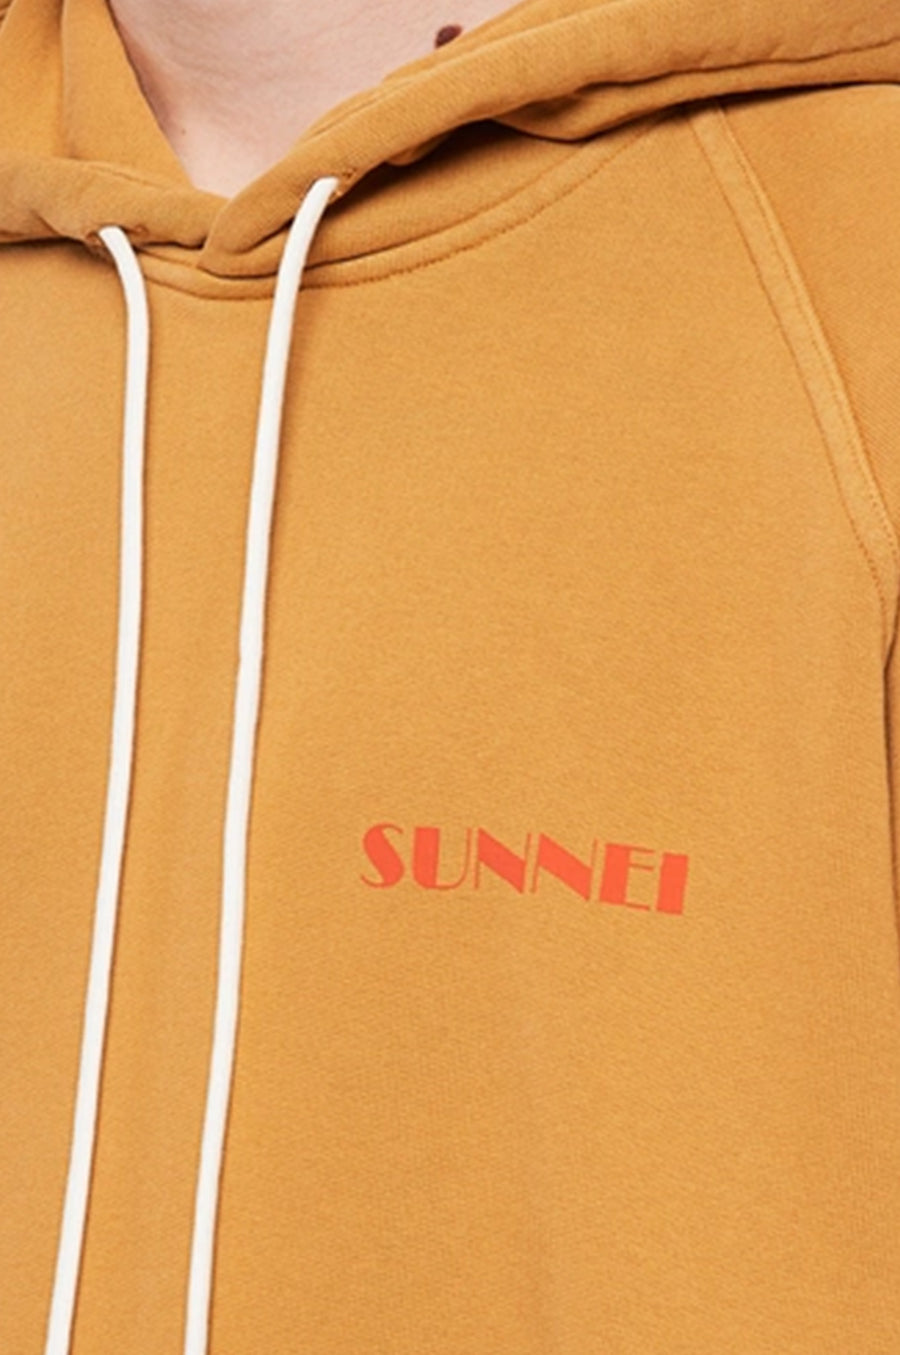 Sunnei - Hooded Sweatshirt - Caramel